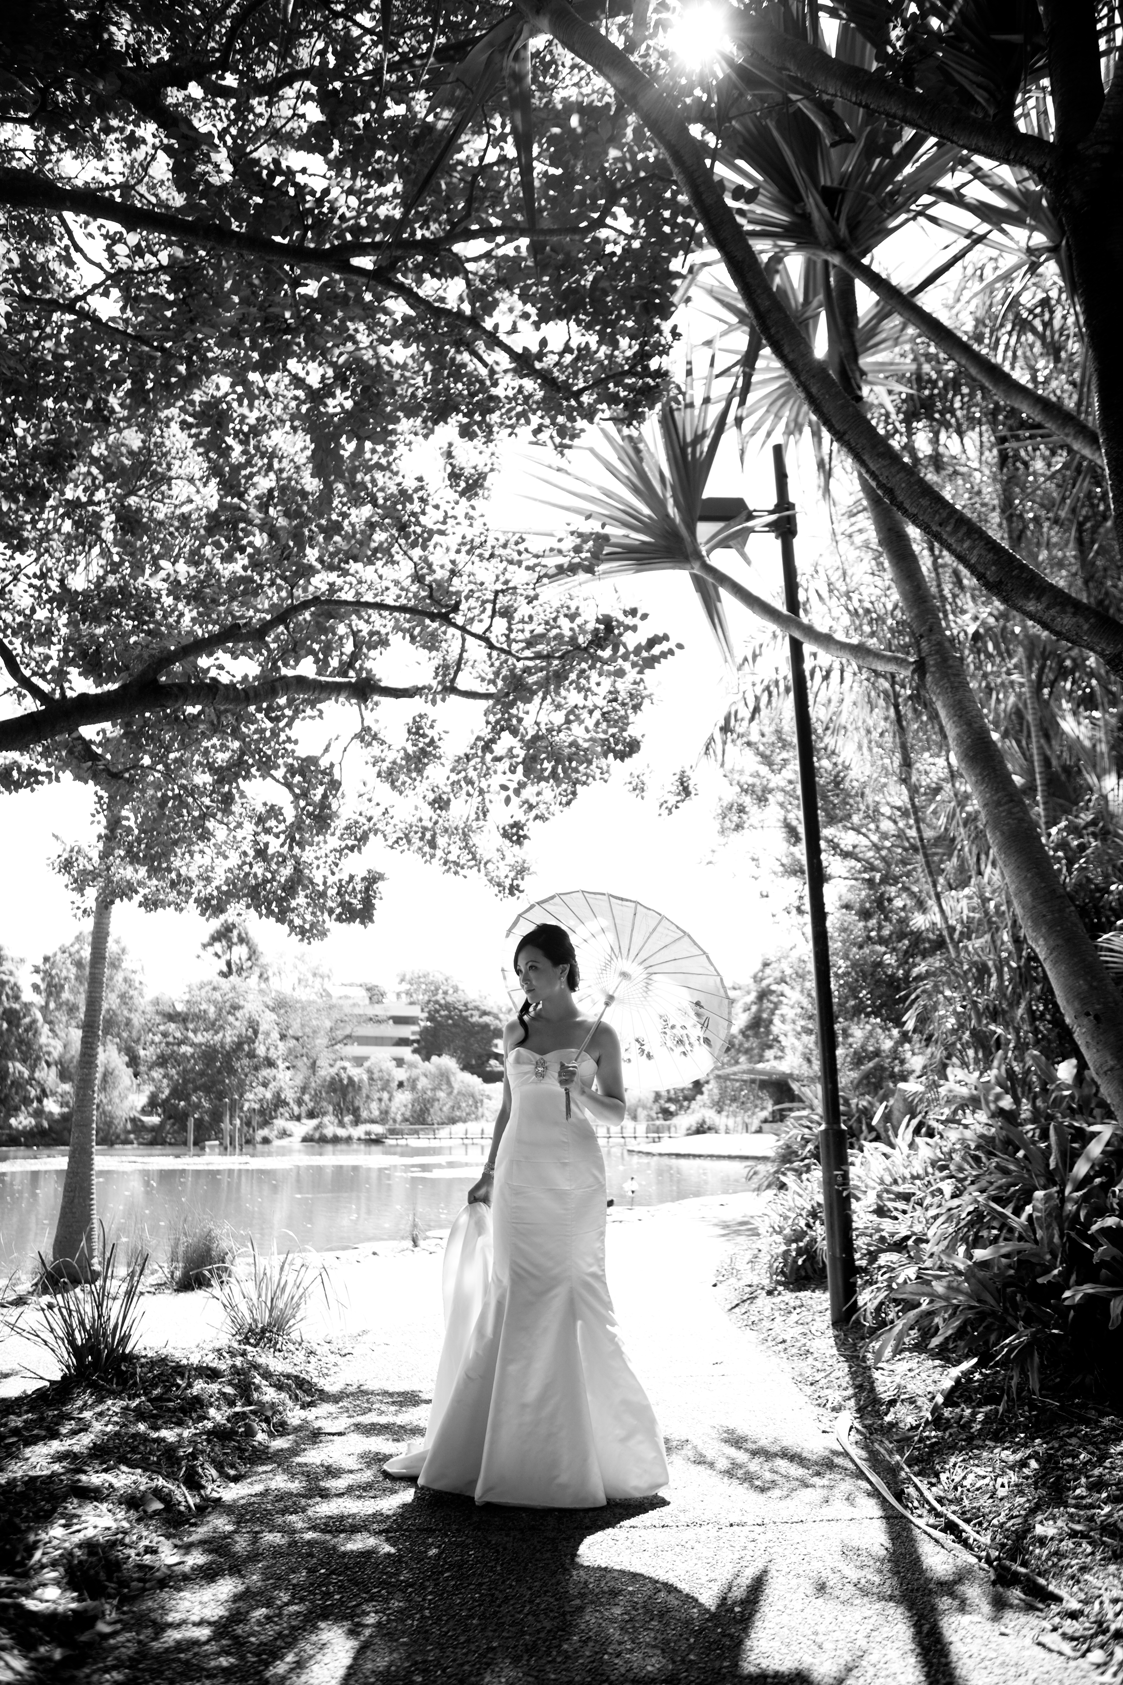 Vietnamese bride with Parasol in photo shoot